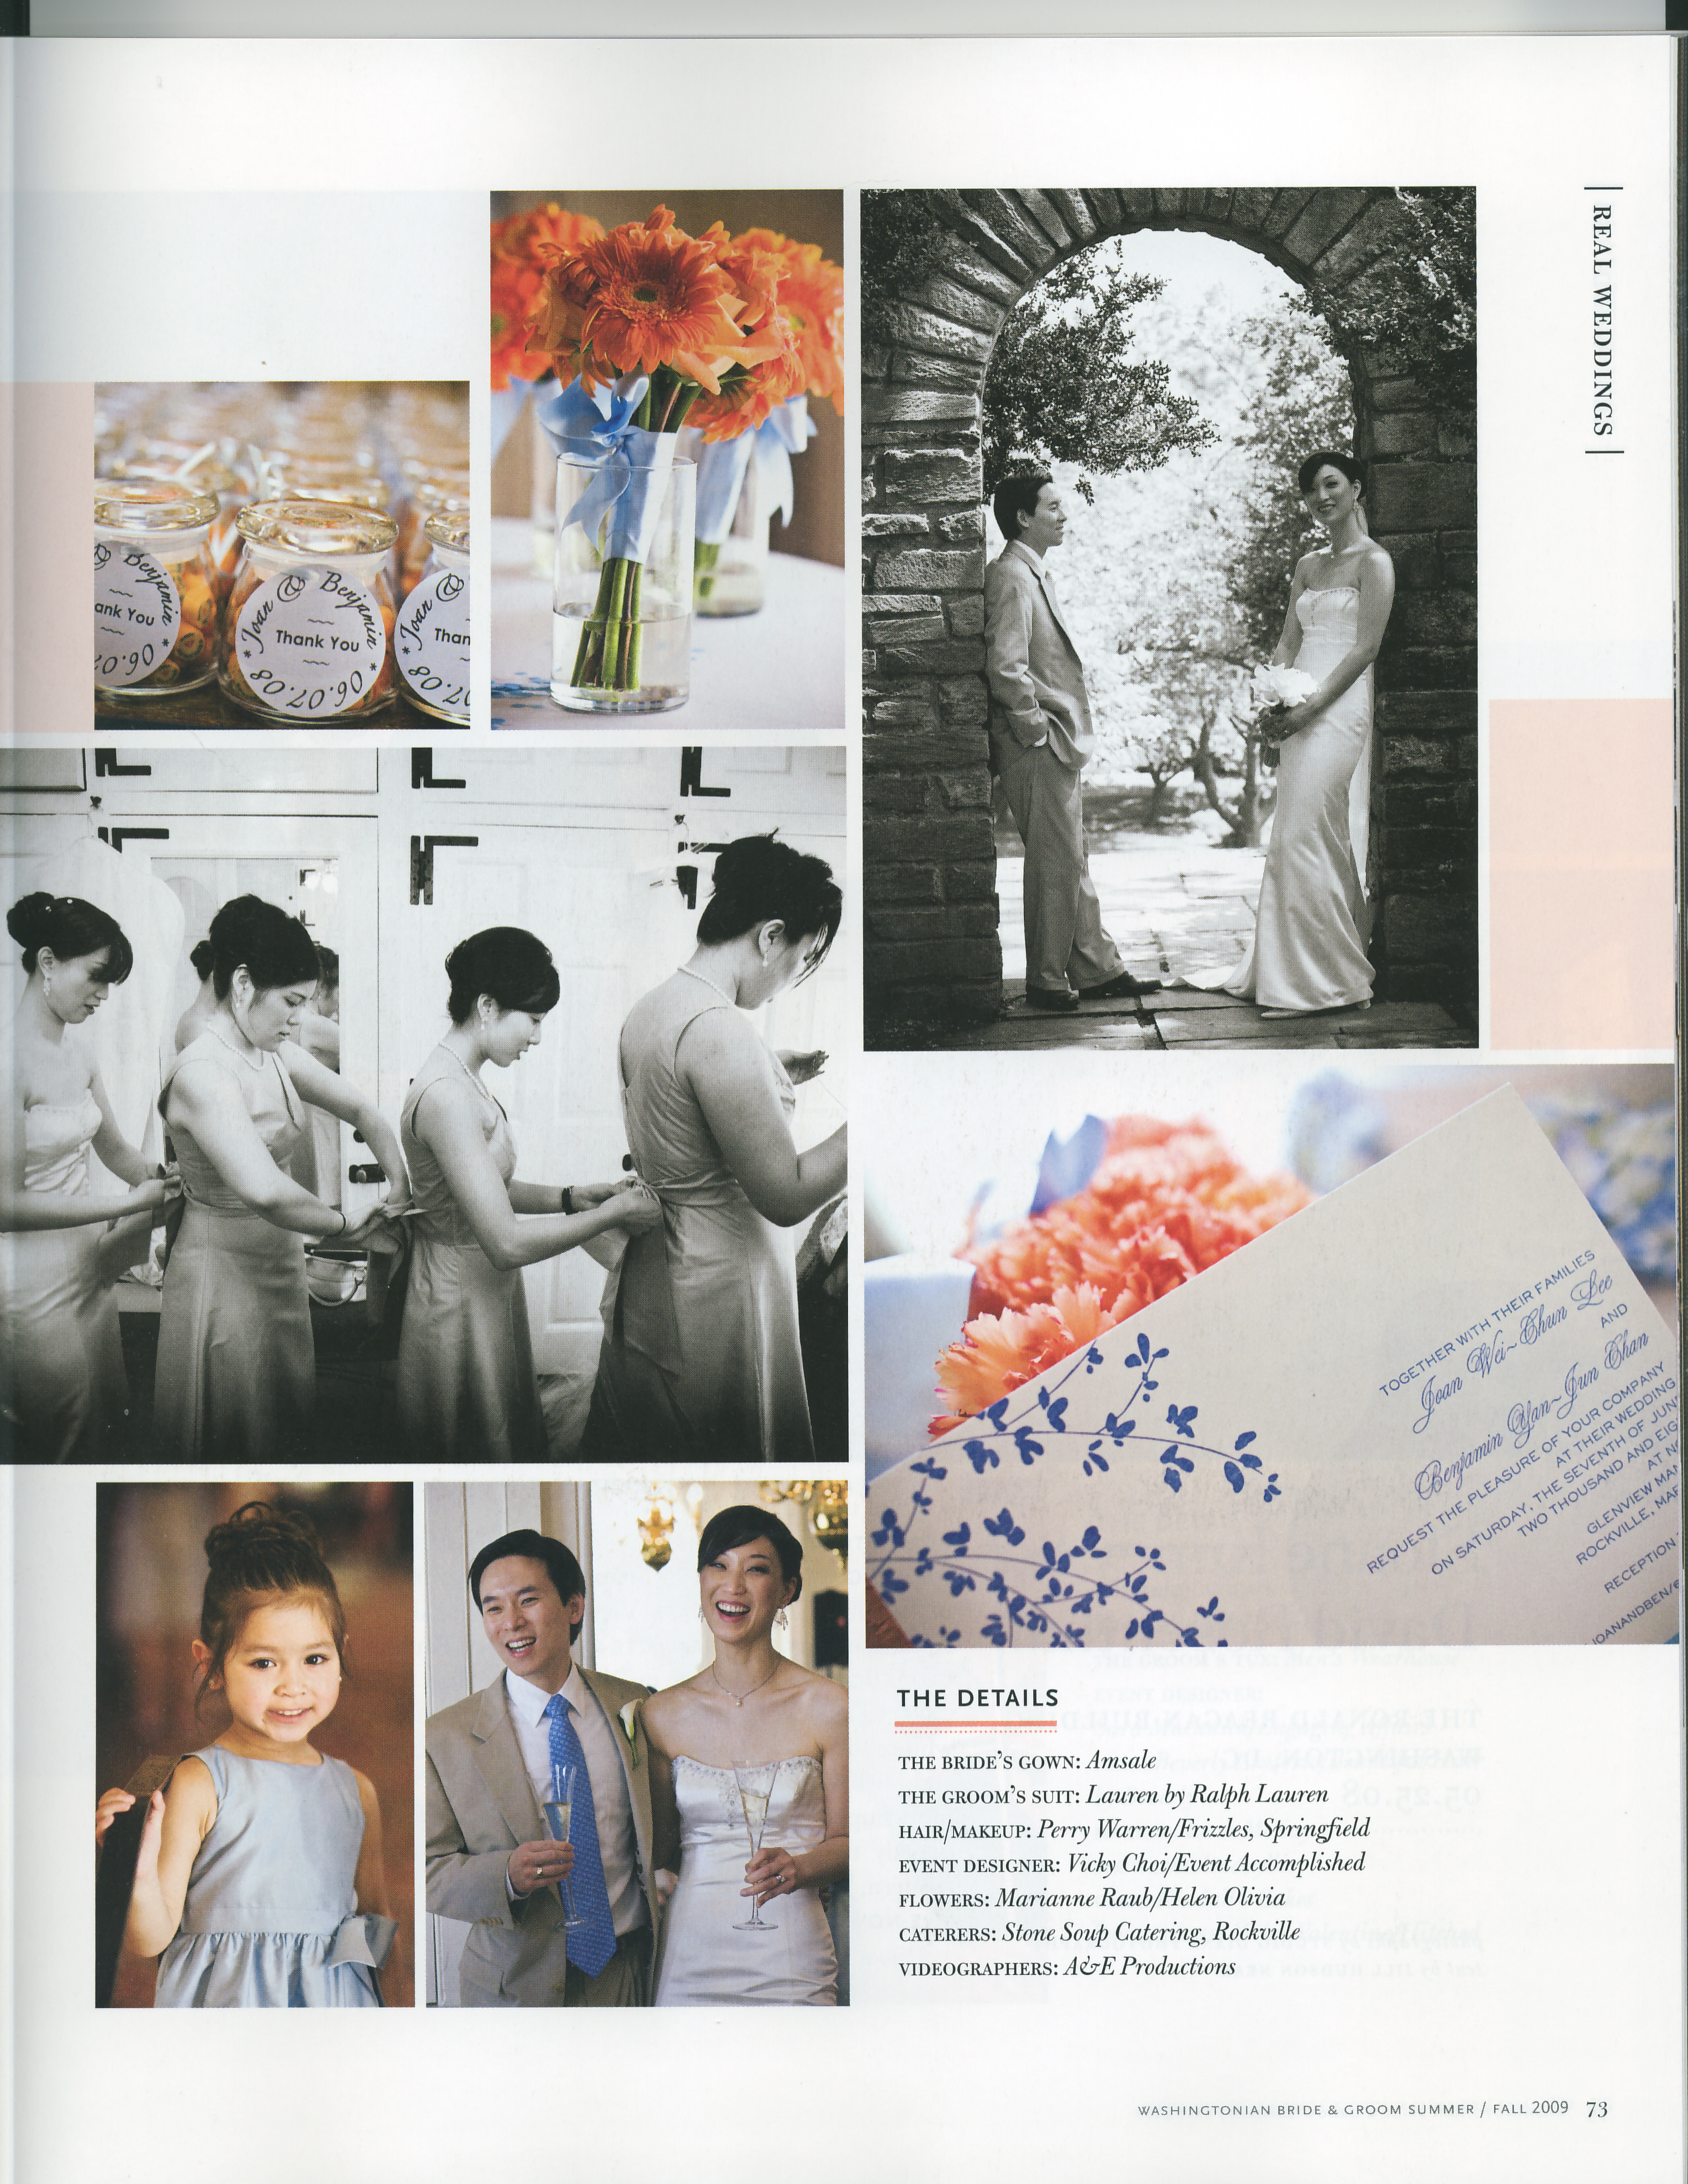 Event Accomplished in Washingtonian Bride and Groom magazine